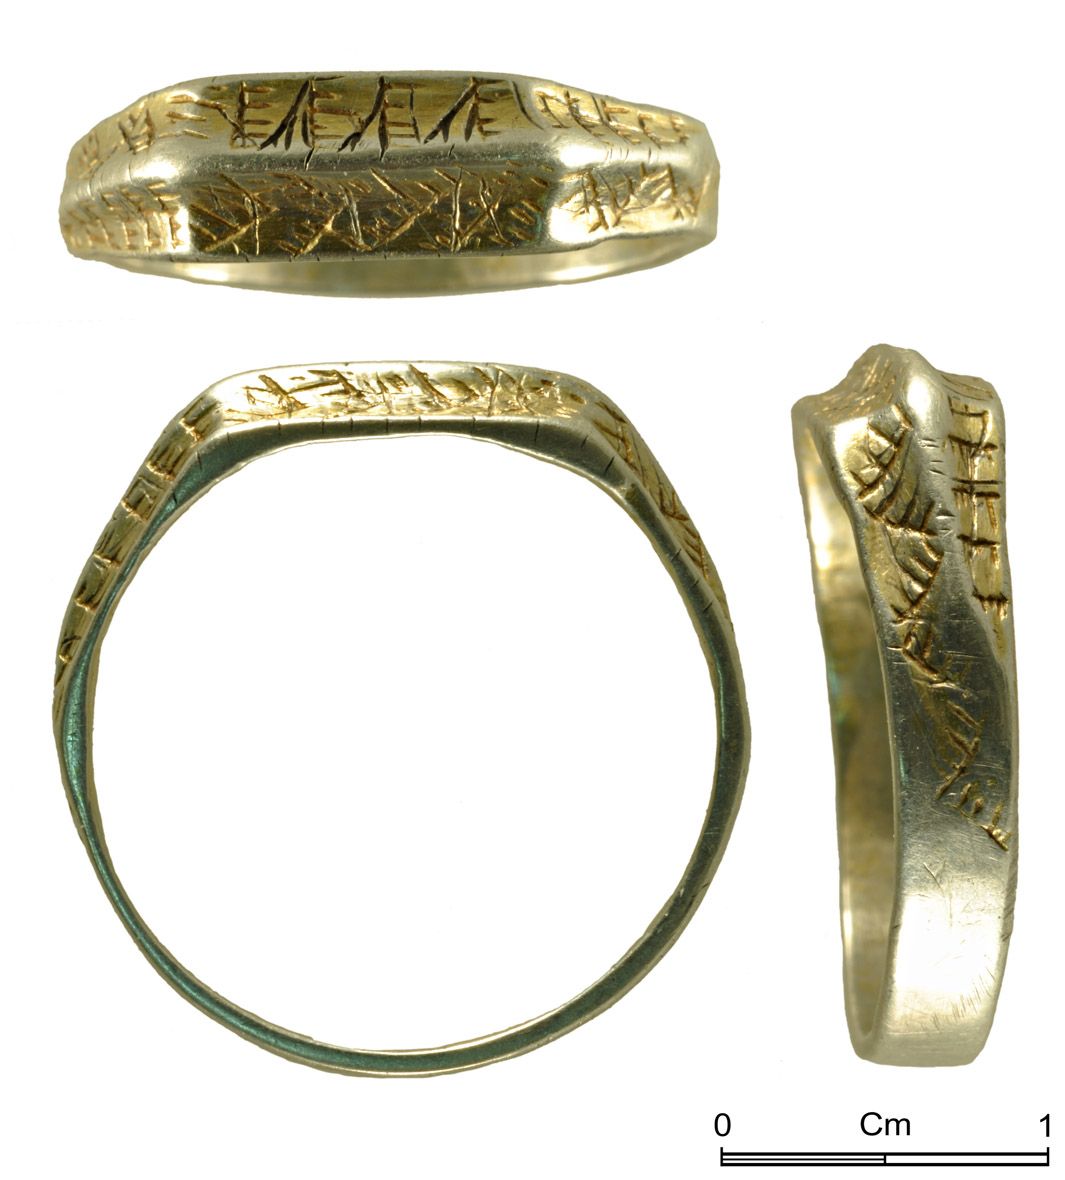 Decorative ring from Gileston